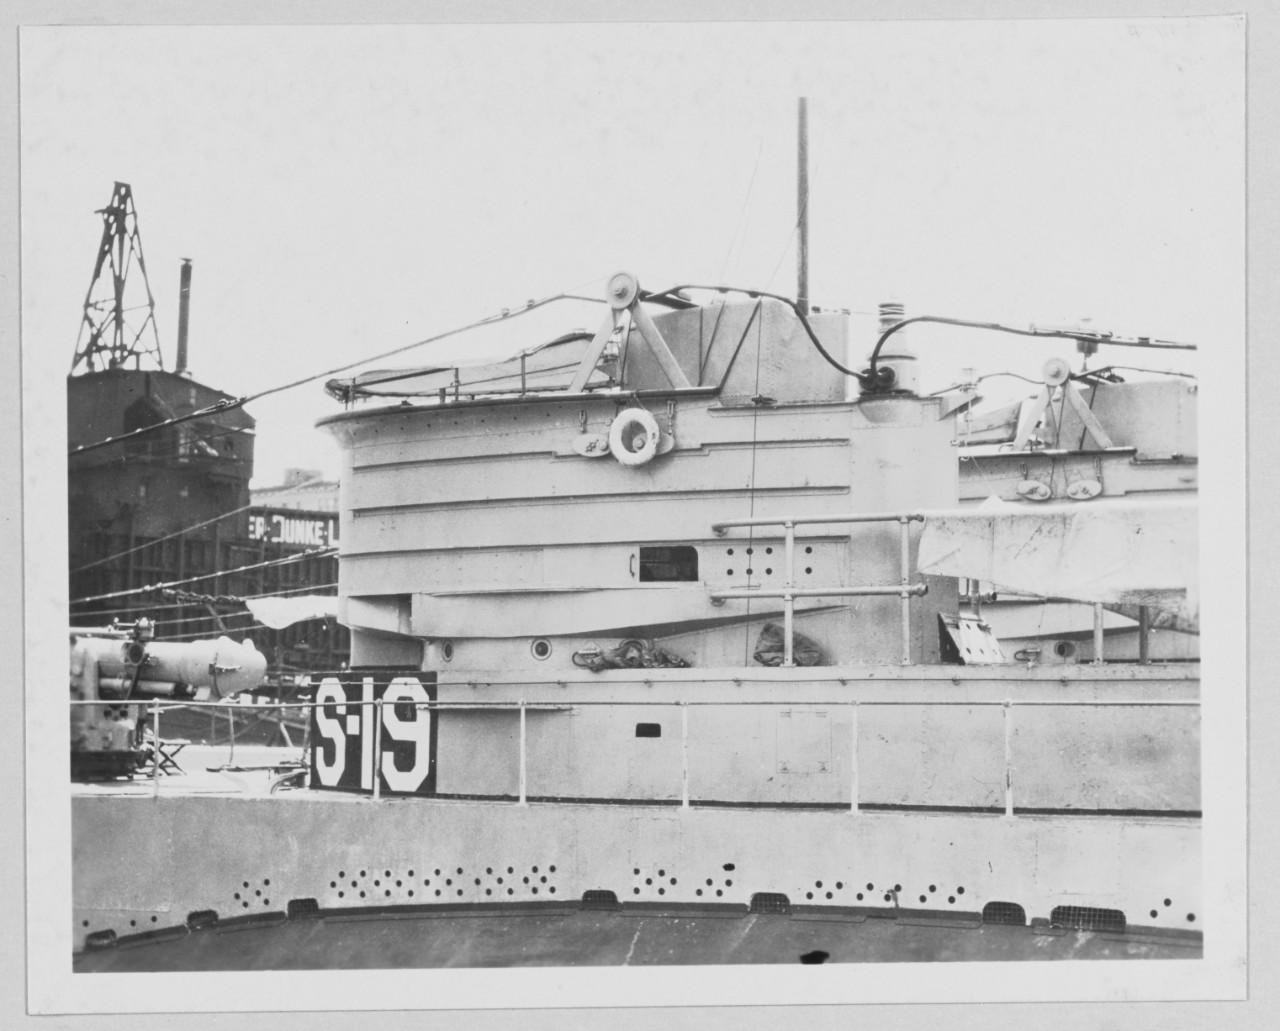 USS S-19 (SS-124)